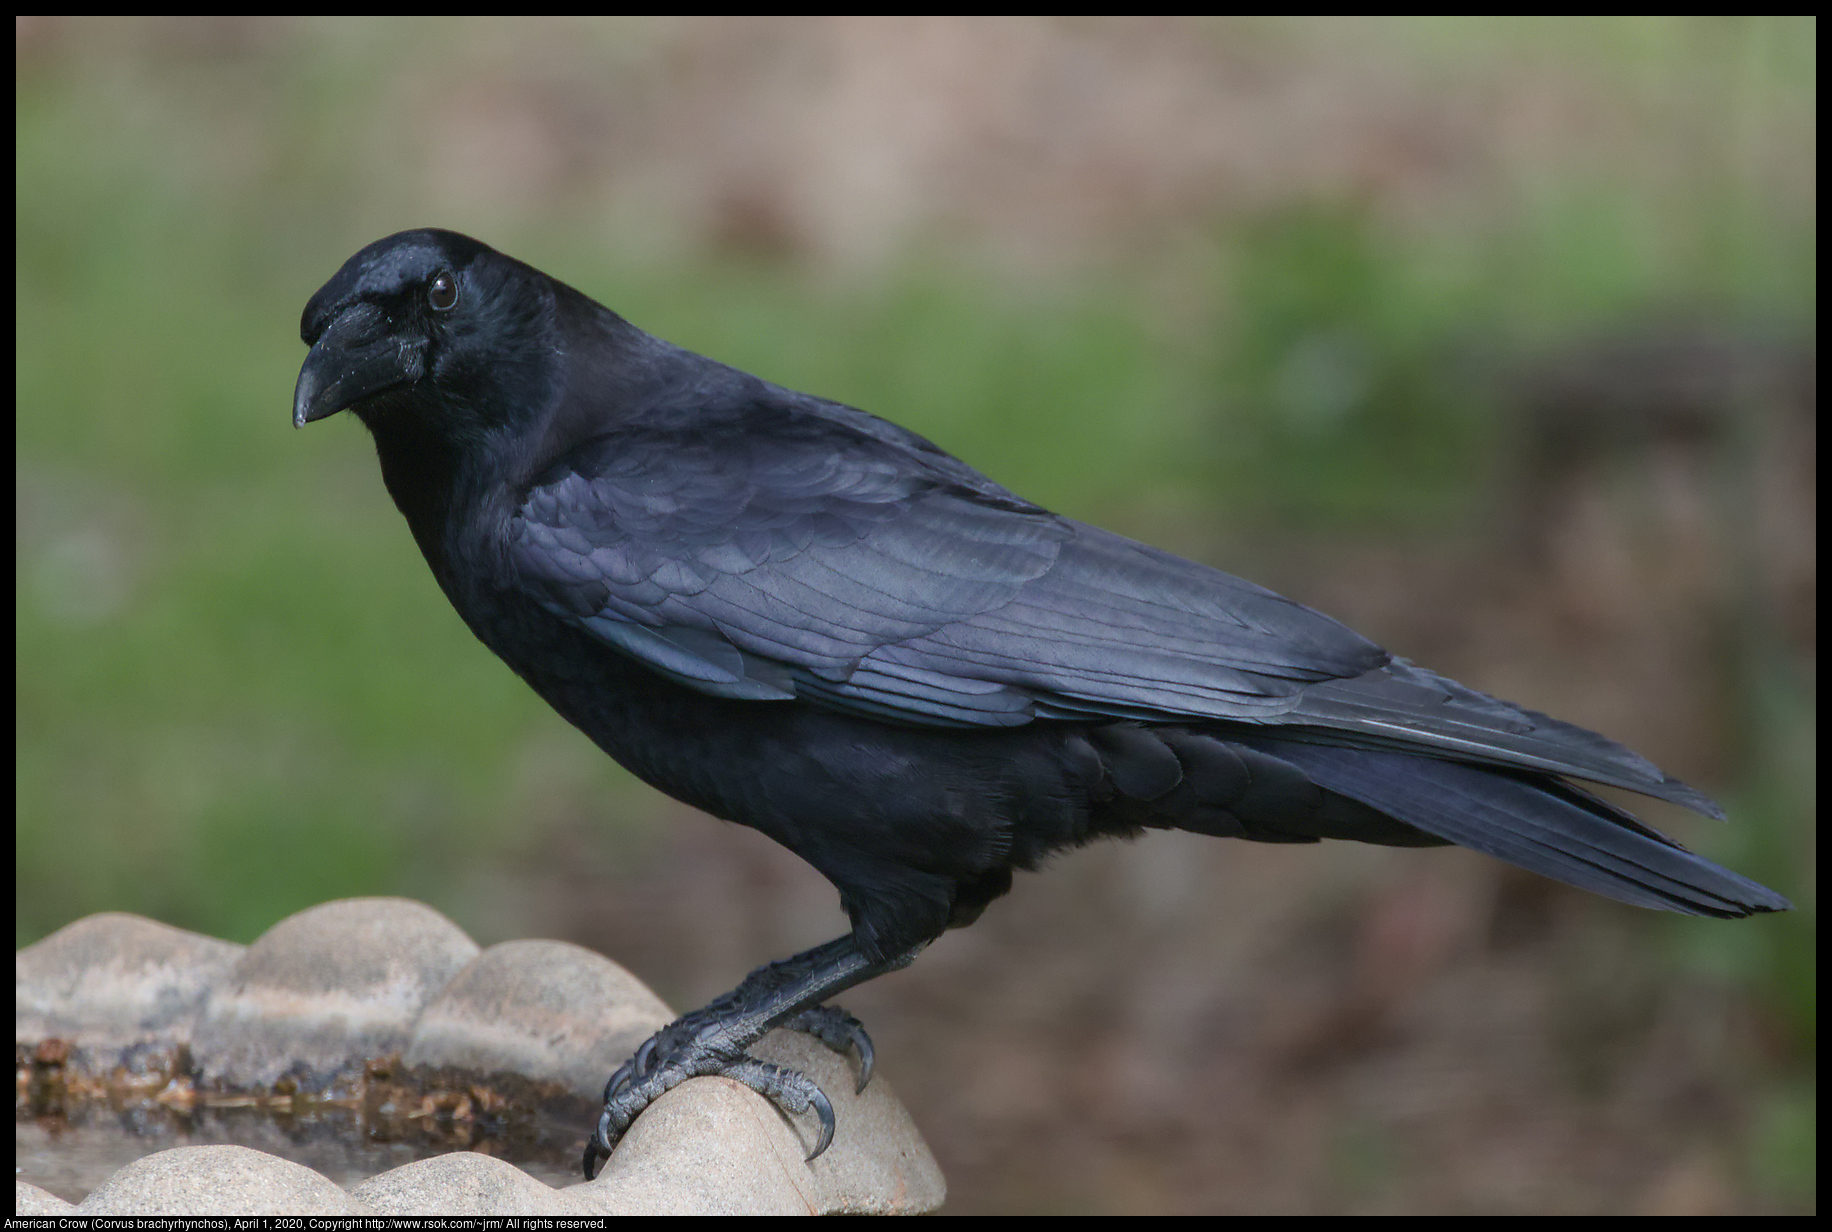 American Crow (Corvus brachyrhynchos), April 1, 2020